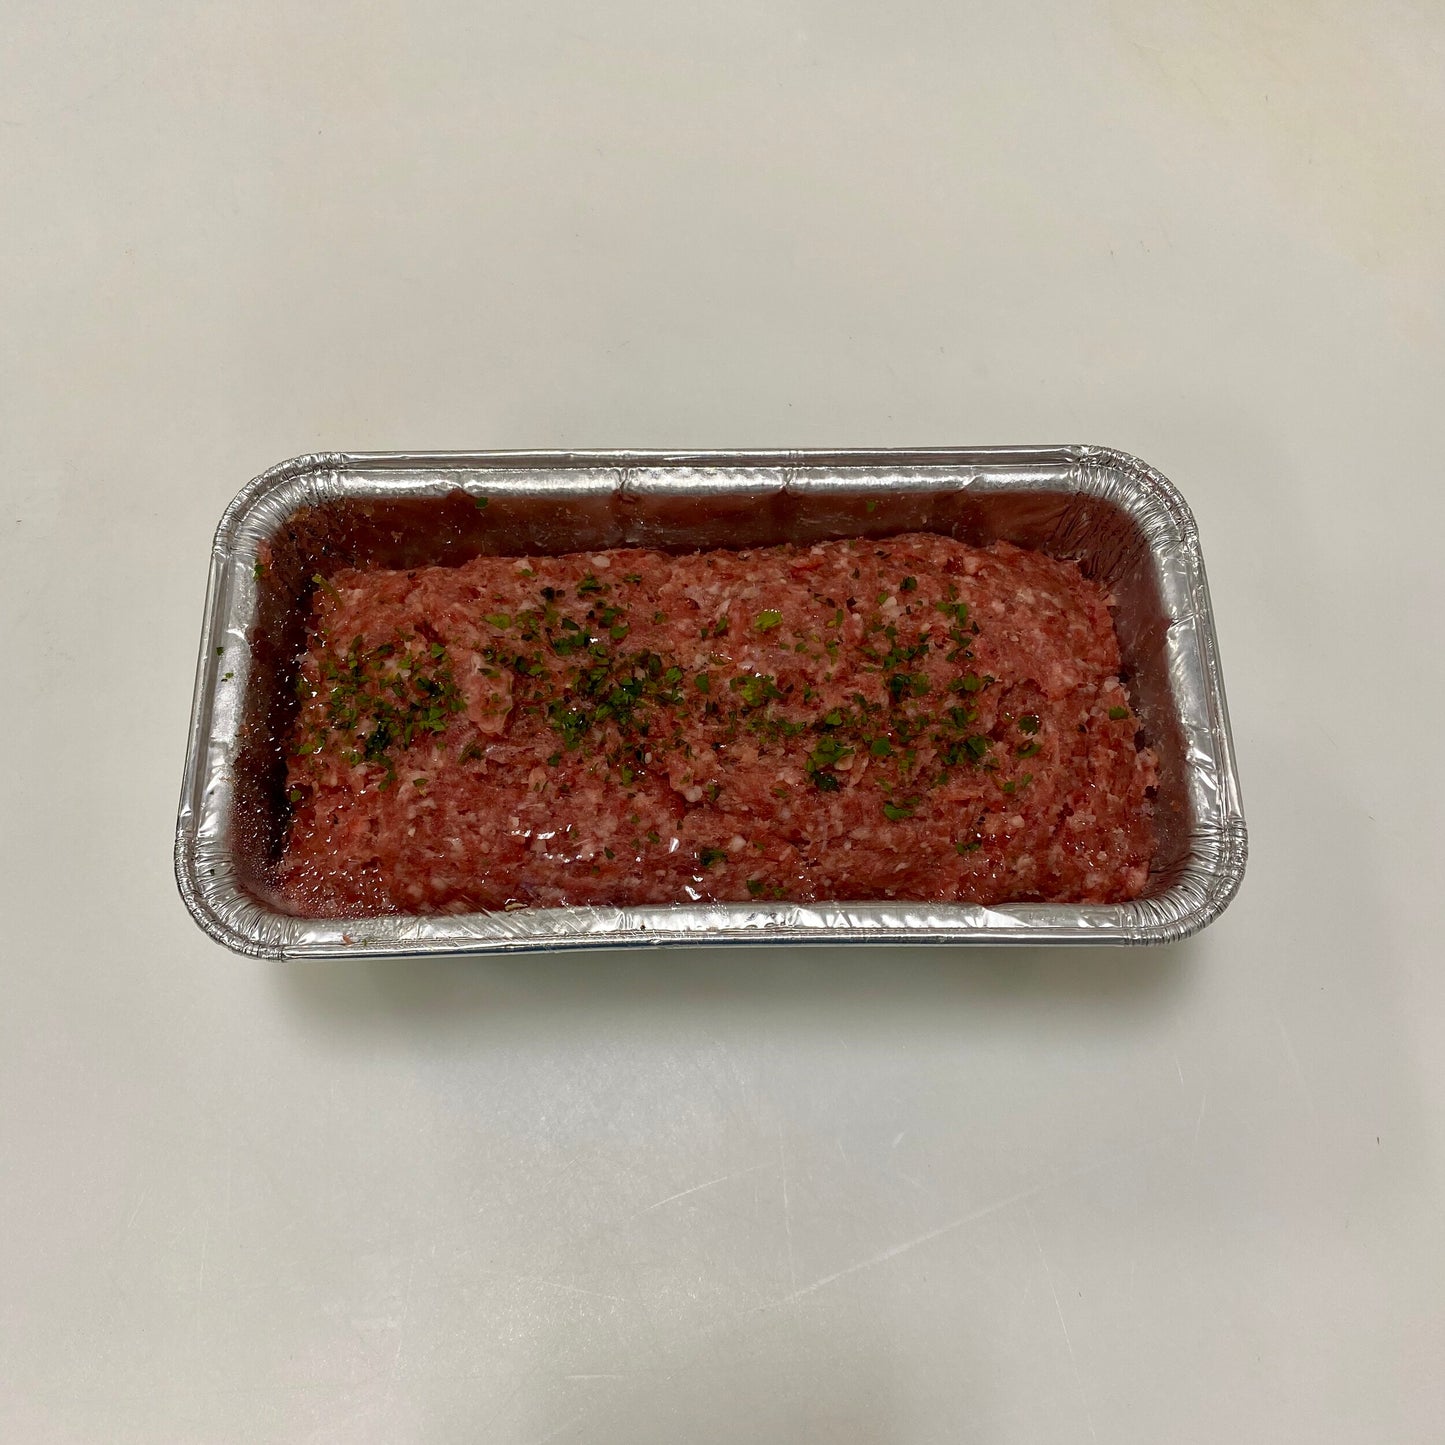 Italian Style Meatloaf (1.5 lb. pan)